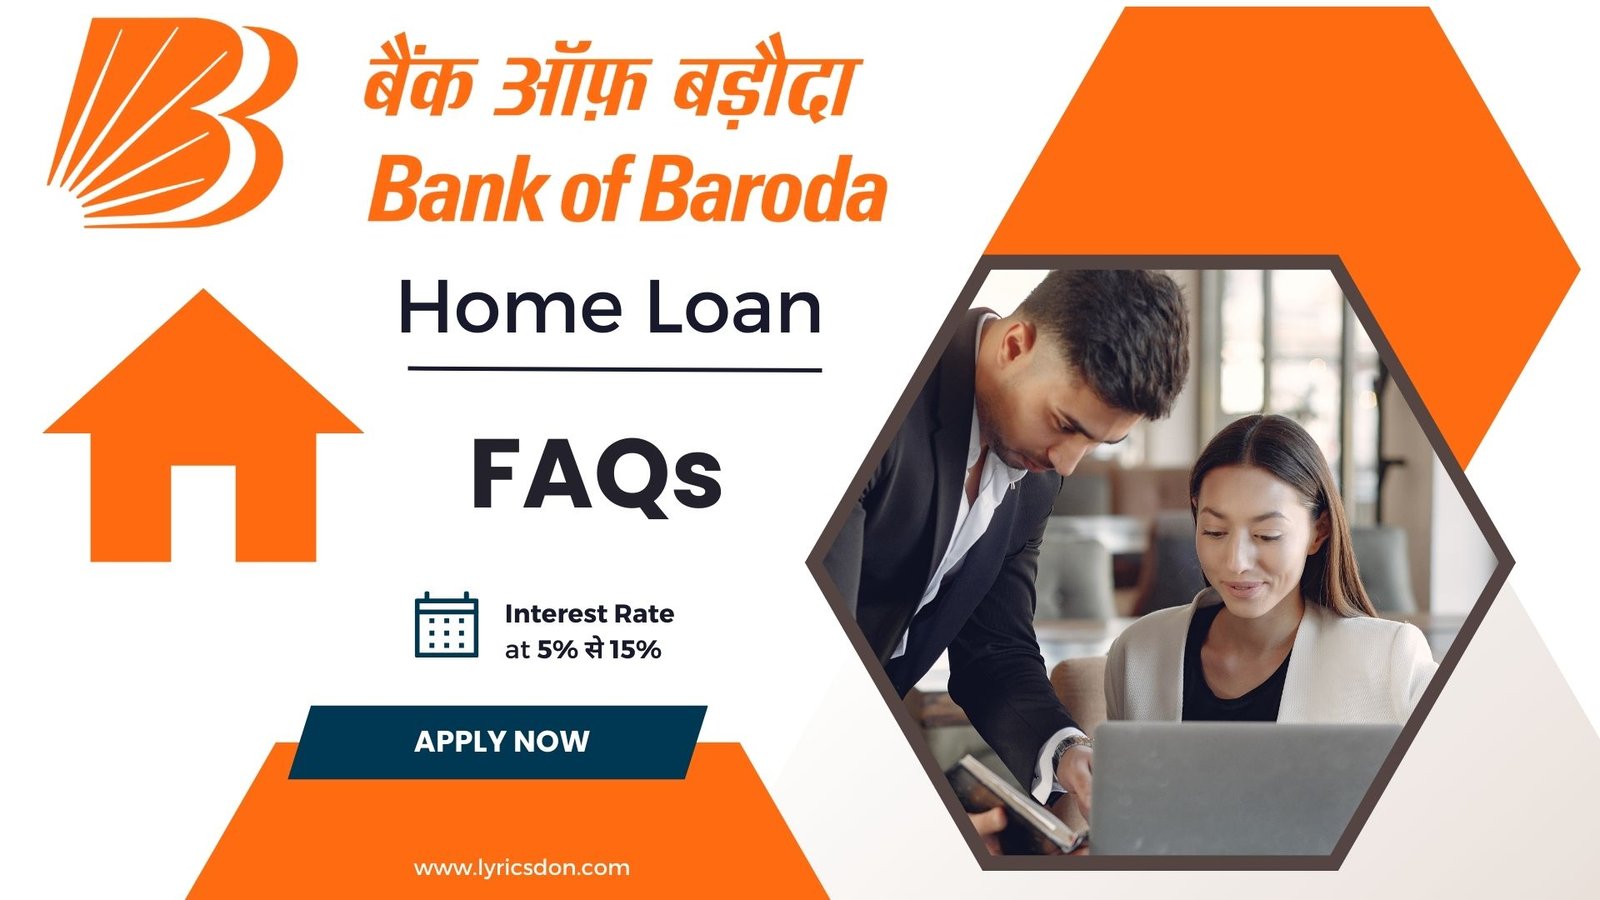 Bank Of Baroda Home Loan FAQ